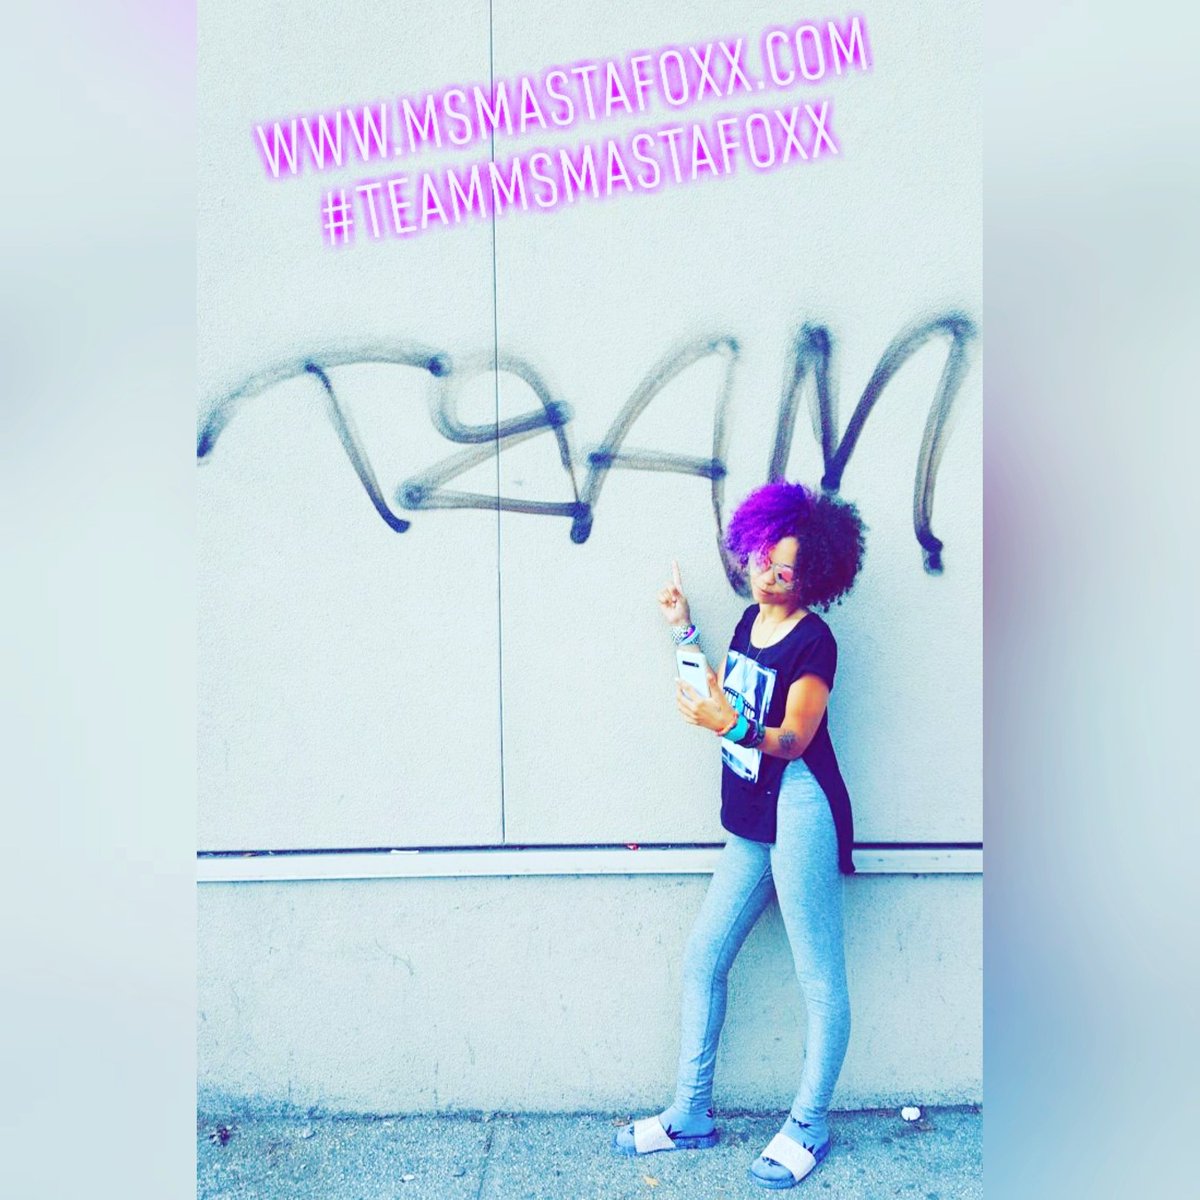 My New Website MsMastaFoXX.com Launched Today! 🖥📲💻📷👑👽 #TeamMsMastaFoXX #UFlyOSquad #CosmicFam #MsCosmicQueen
'Catch Our Fly!' @MsMastaFoXX
Cosmic Fam's UFlyO Squad 🛸👽 Sub & Hop On Our YFO On YouTube! Youtube.com/MsMastaFoXX
#MyCreatorLife #CreatorFoxx #MsMastaFoxx